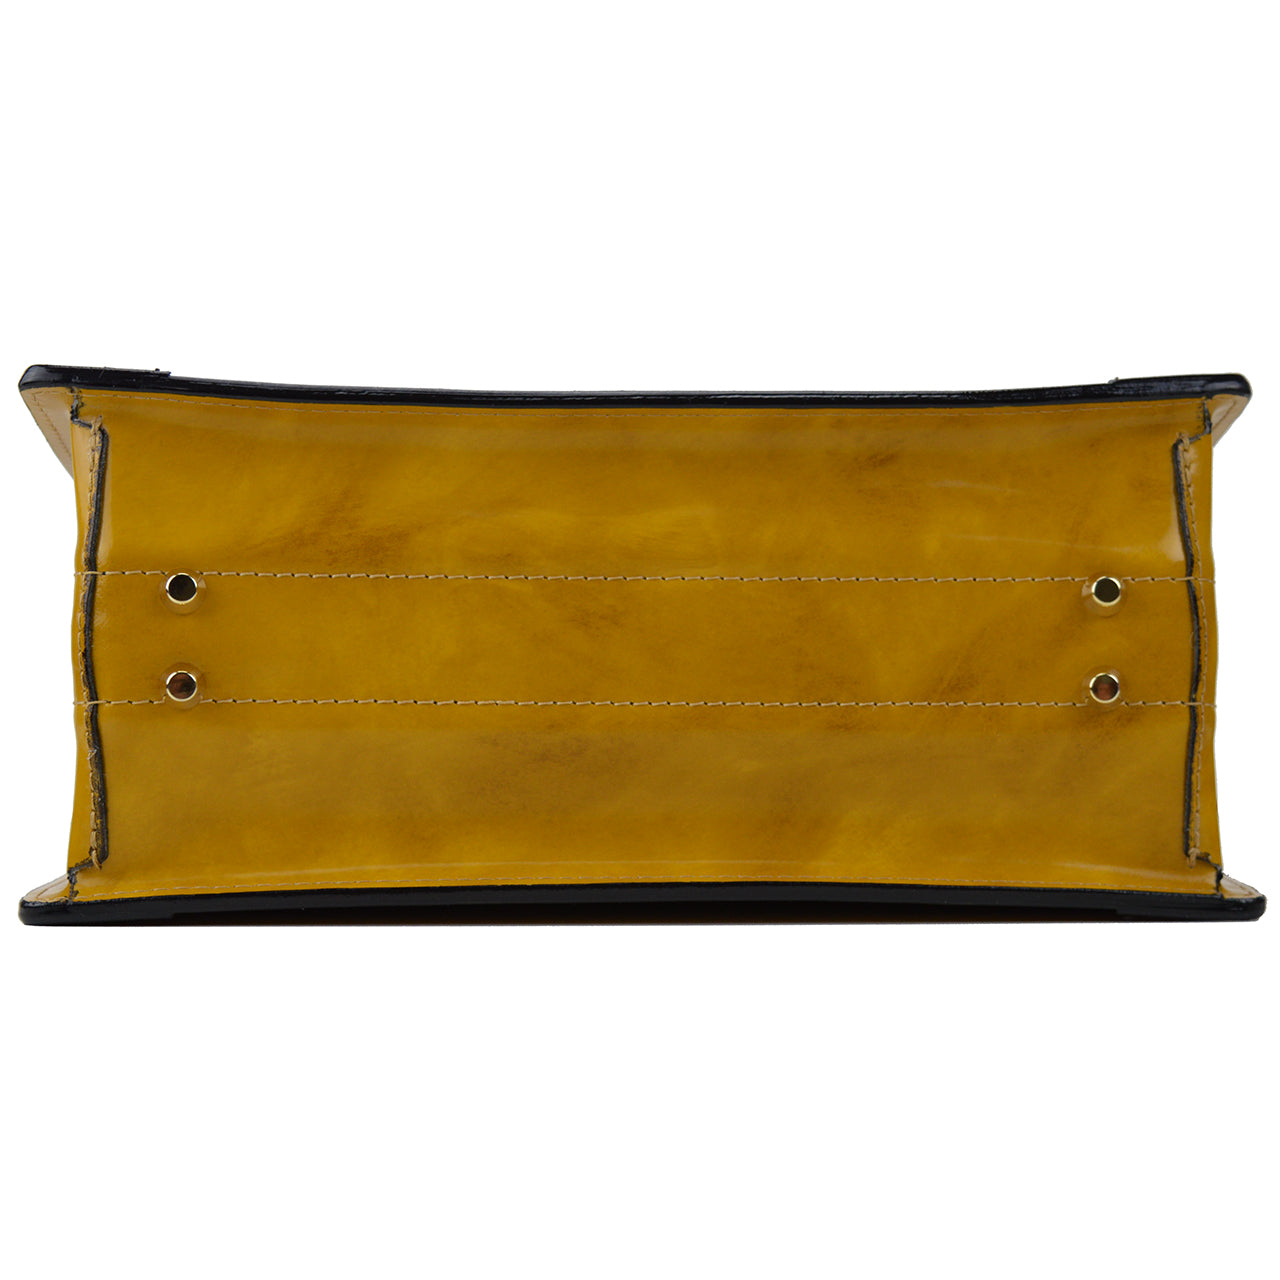 Pratesi Miss Brunelleschi Bag in genuine Italian leather